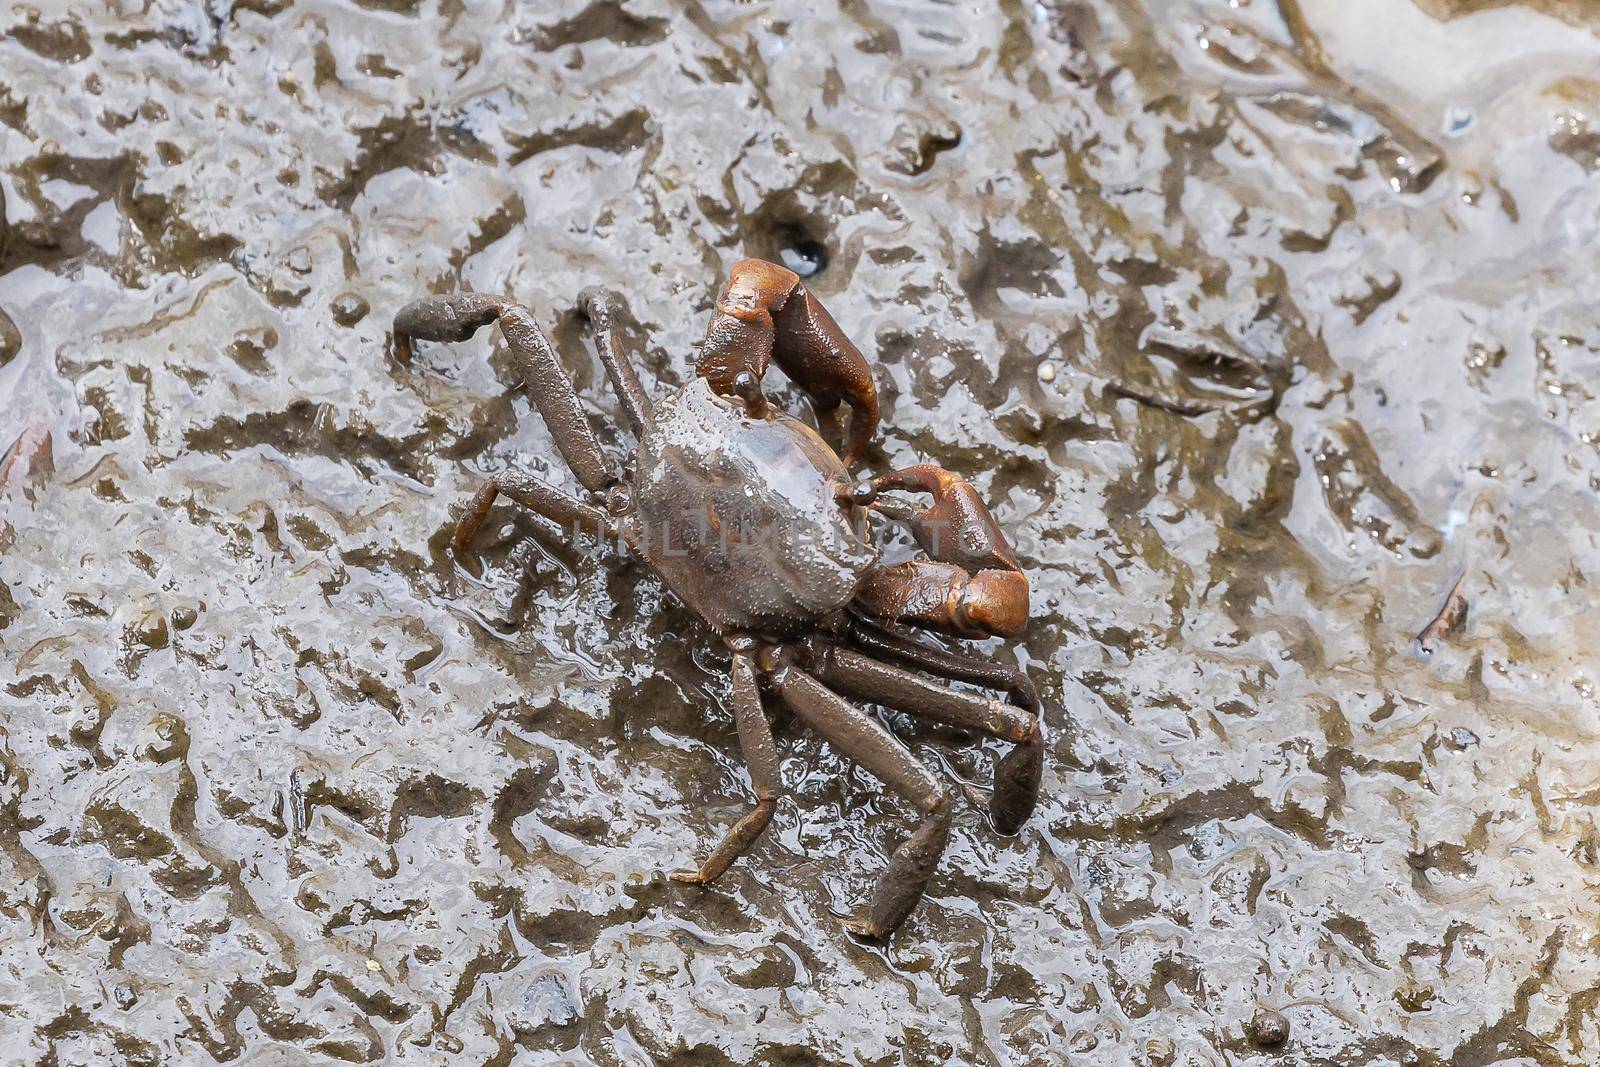 Closeup grapsidae metaplax crab on muddy in mangrove forest
grapsidae, metaplax